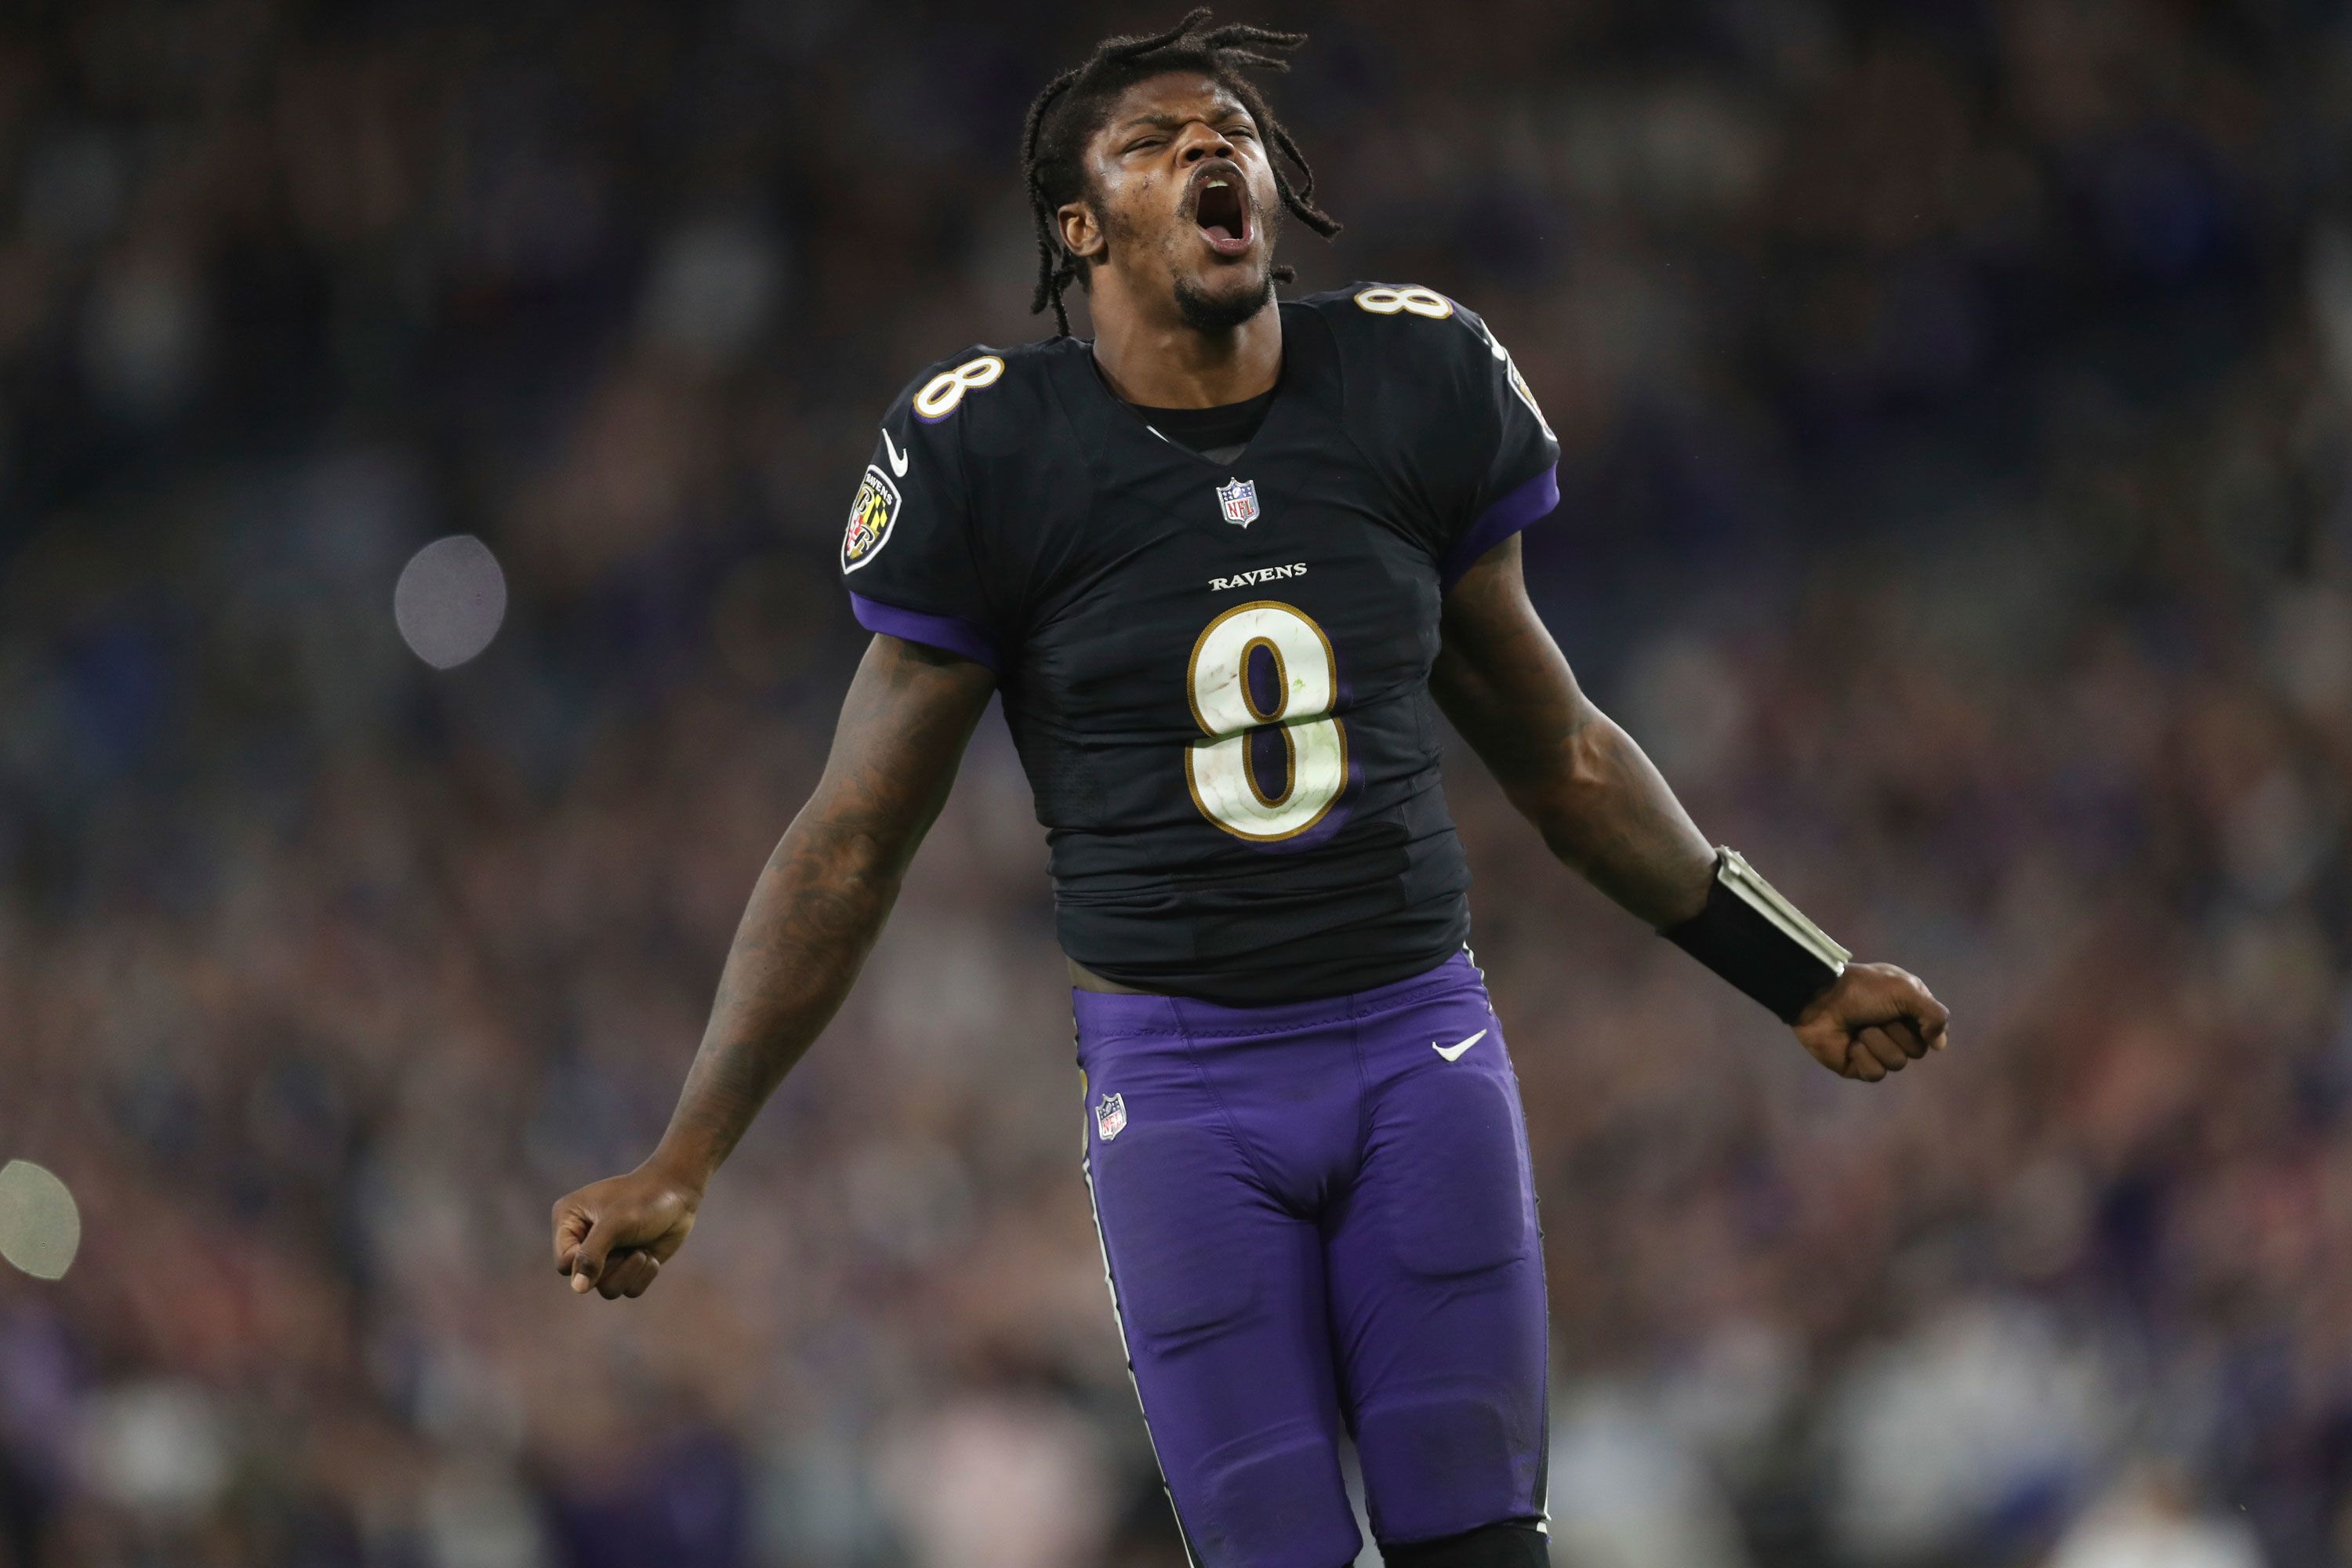 Baltimore Ravens: Lamar Jackson makes history as Ravens complete